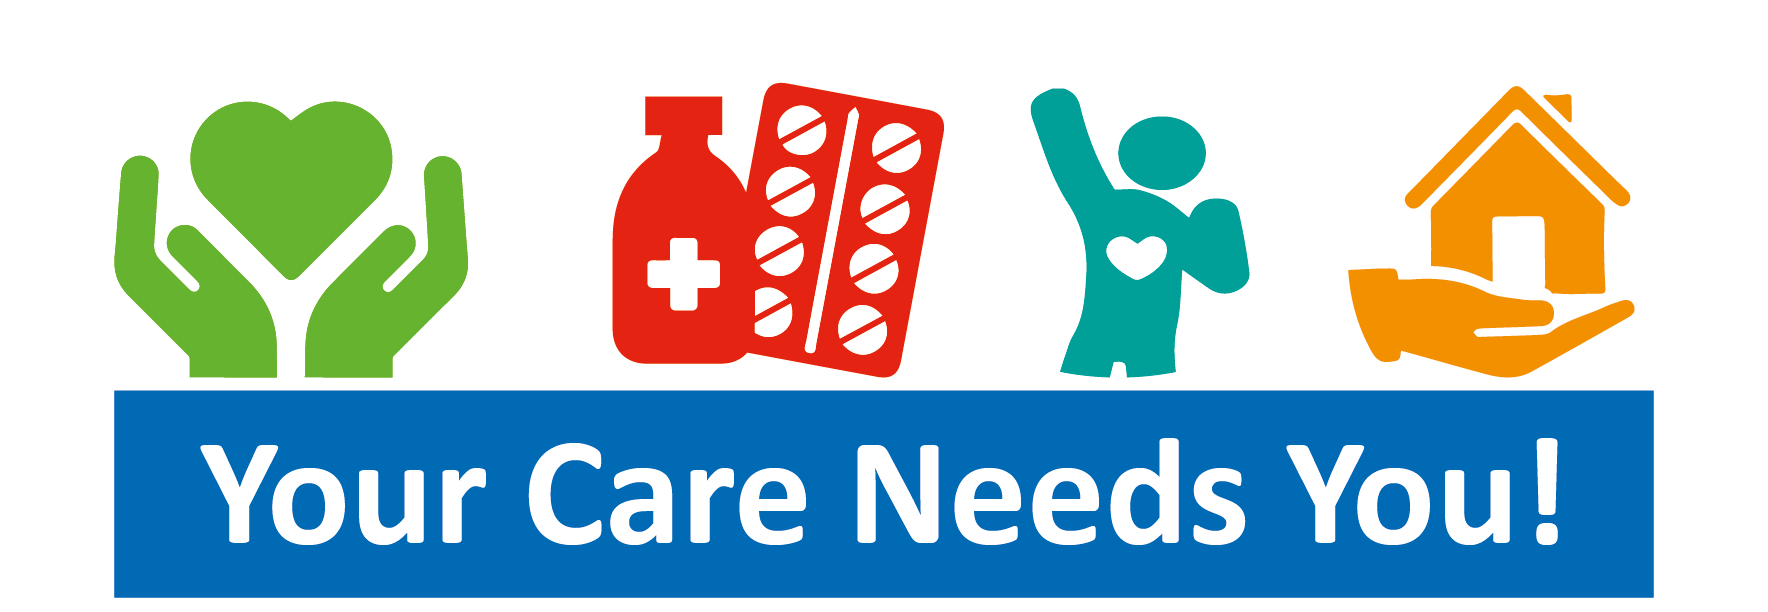 Your care needs you logo